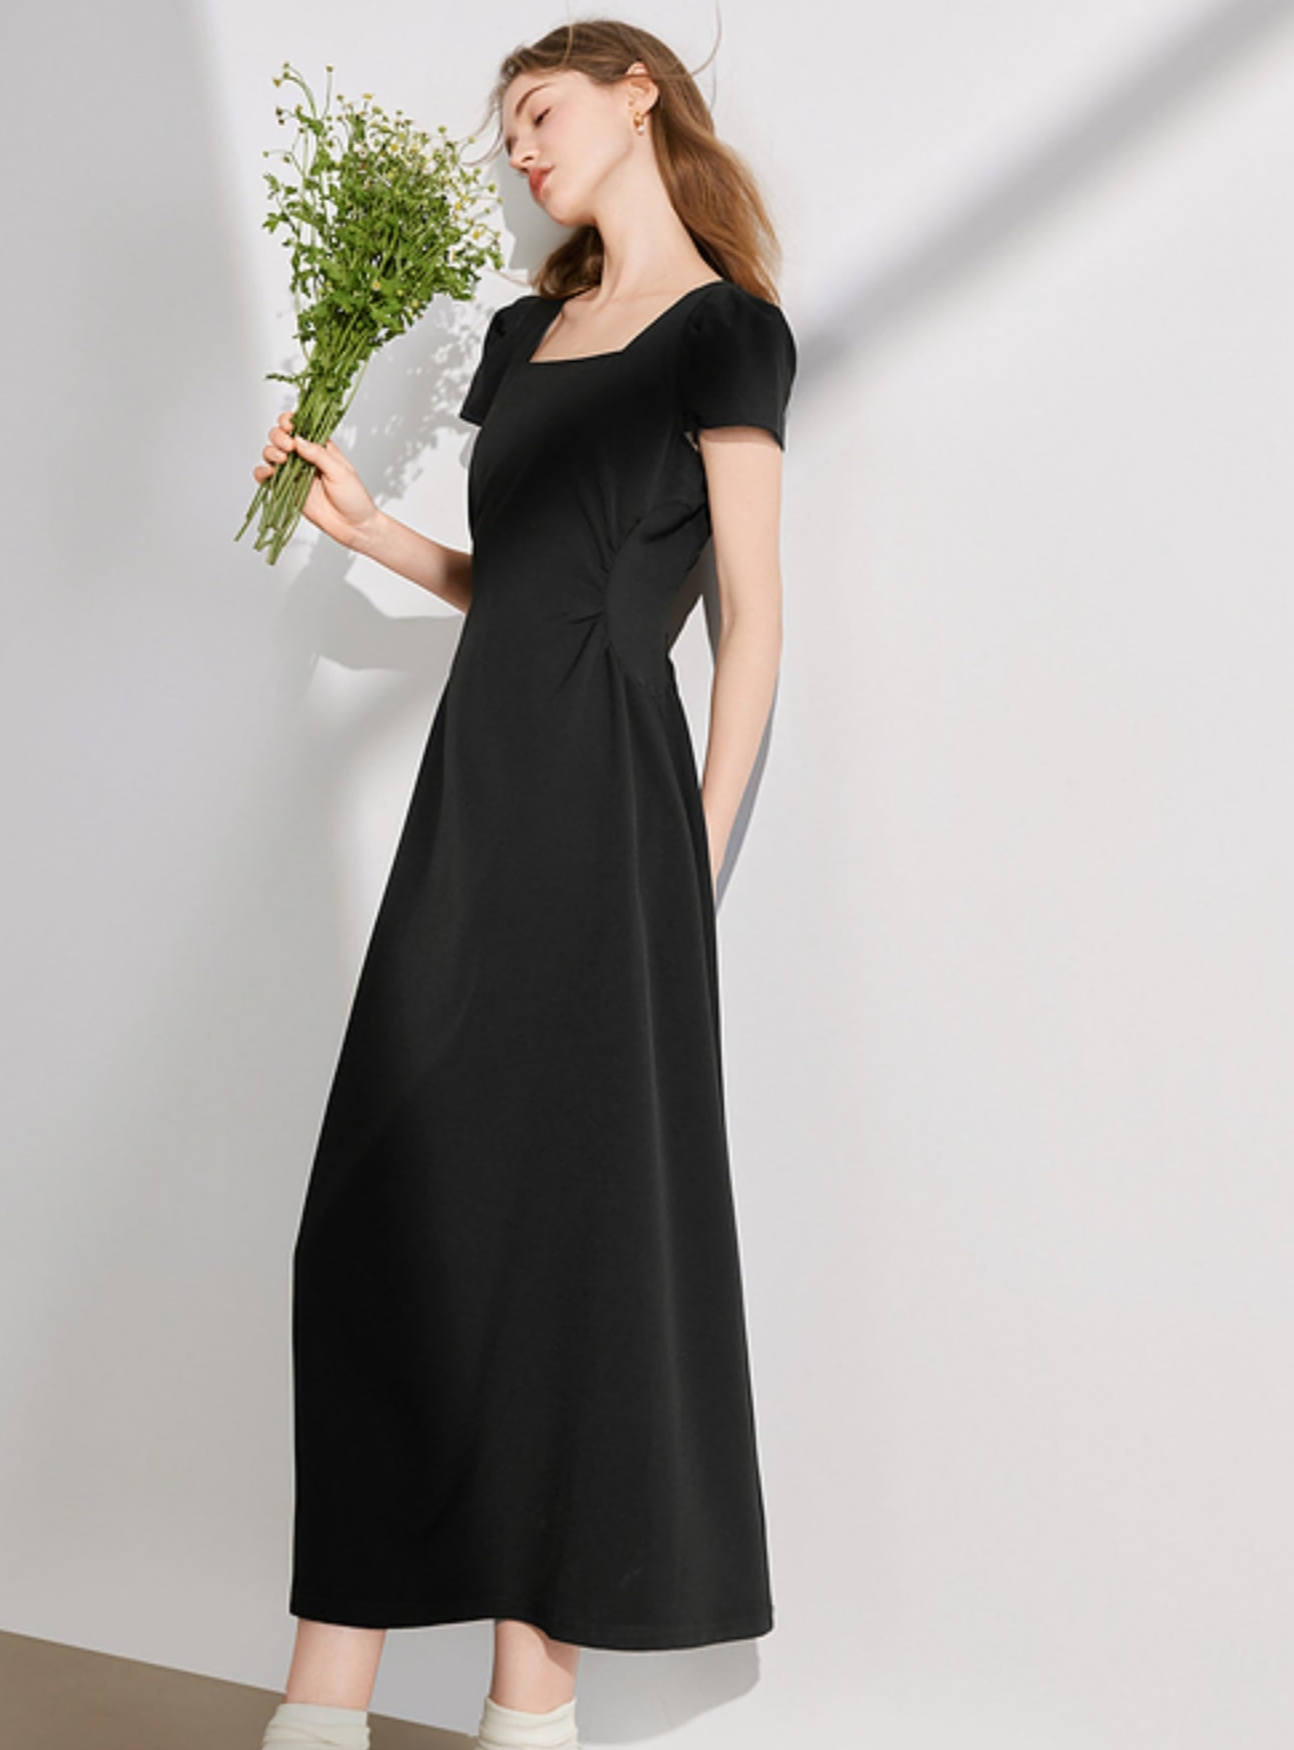 Hepburn Style Waist Dress